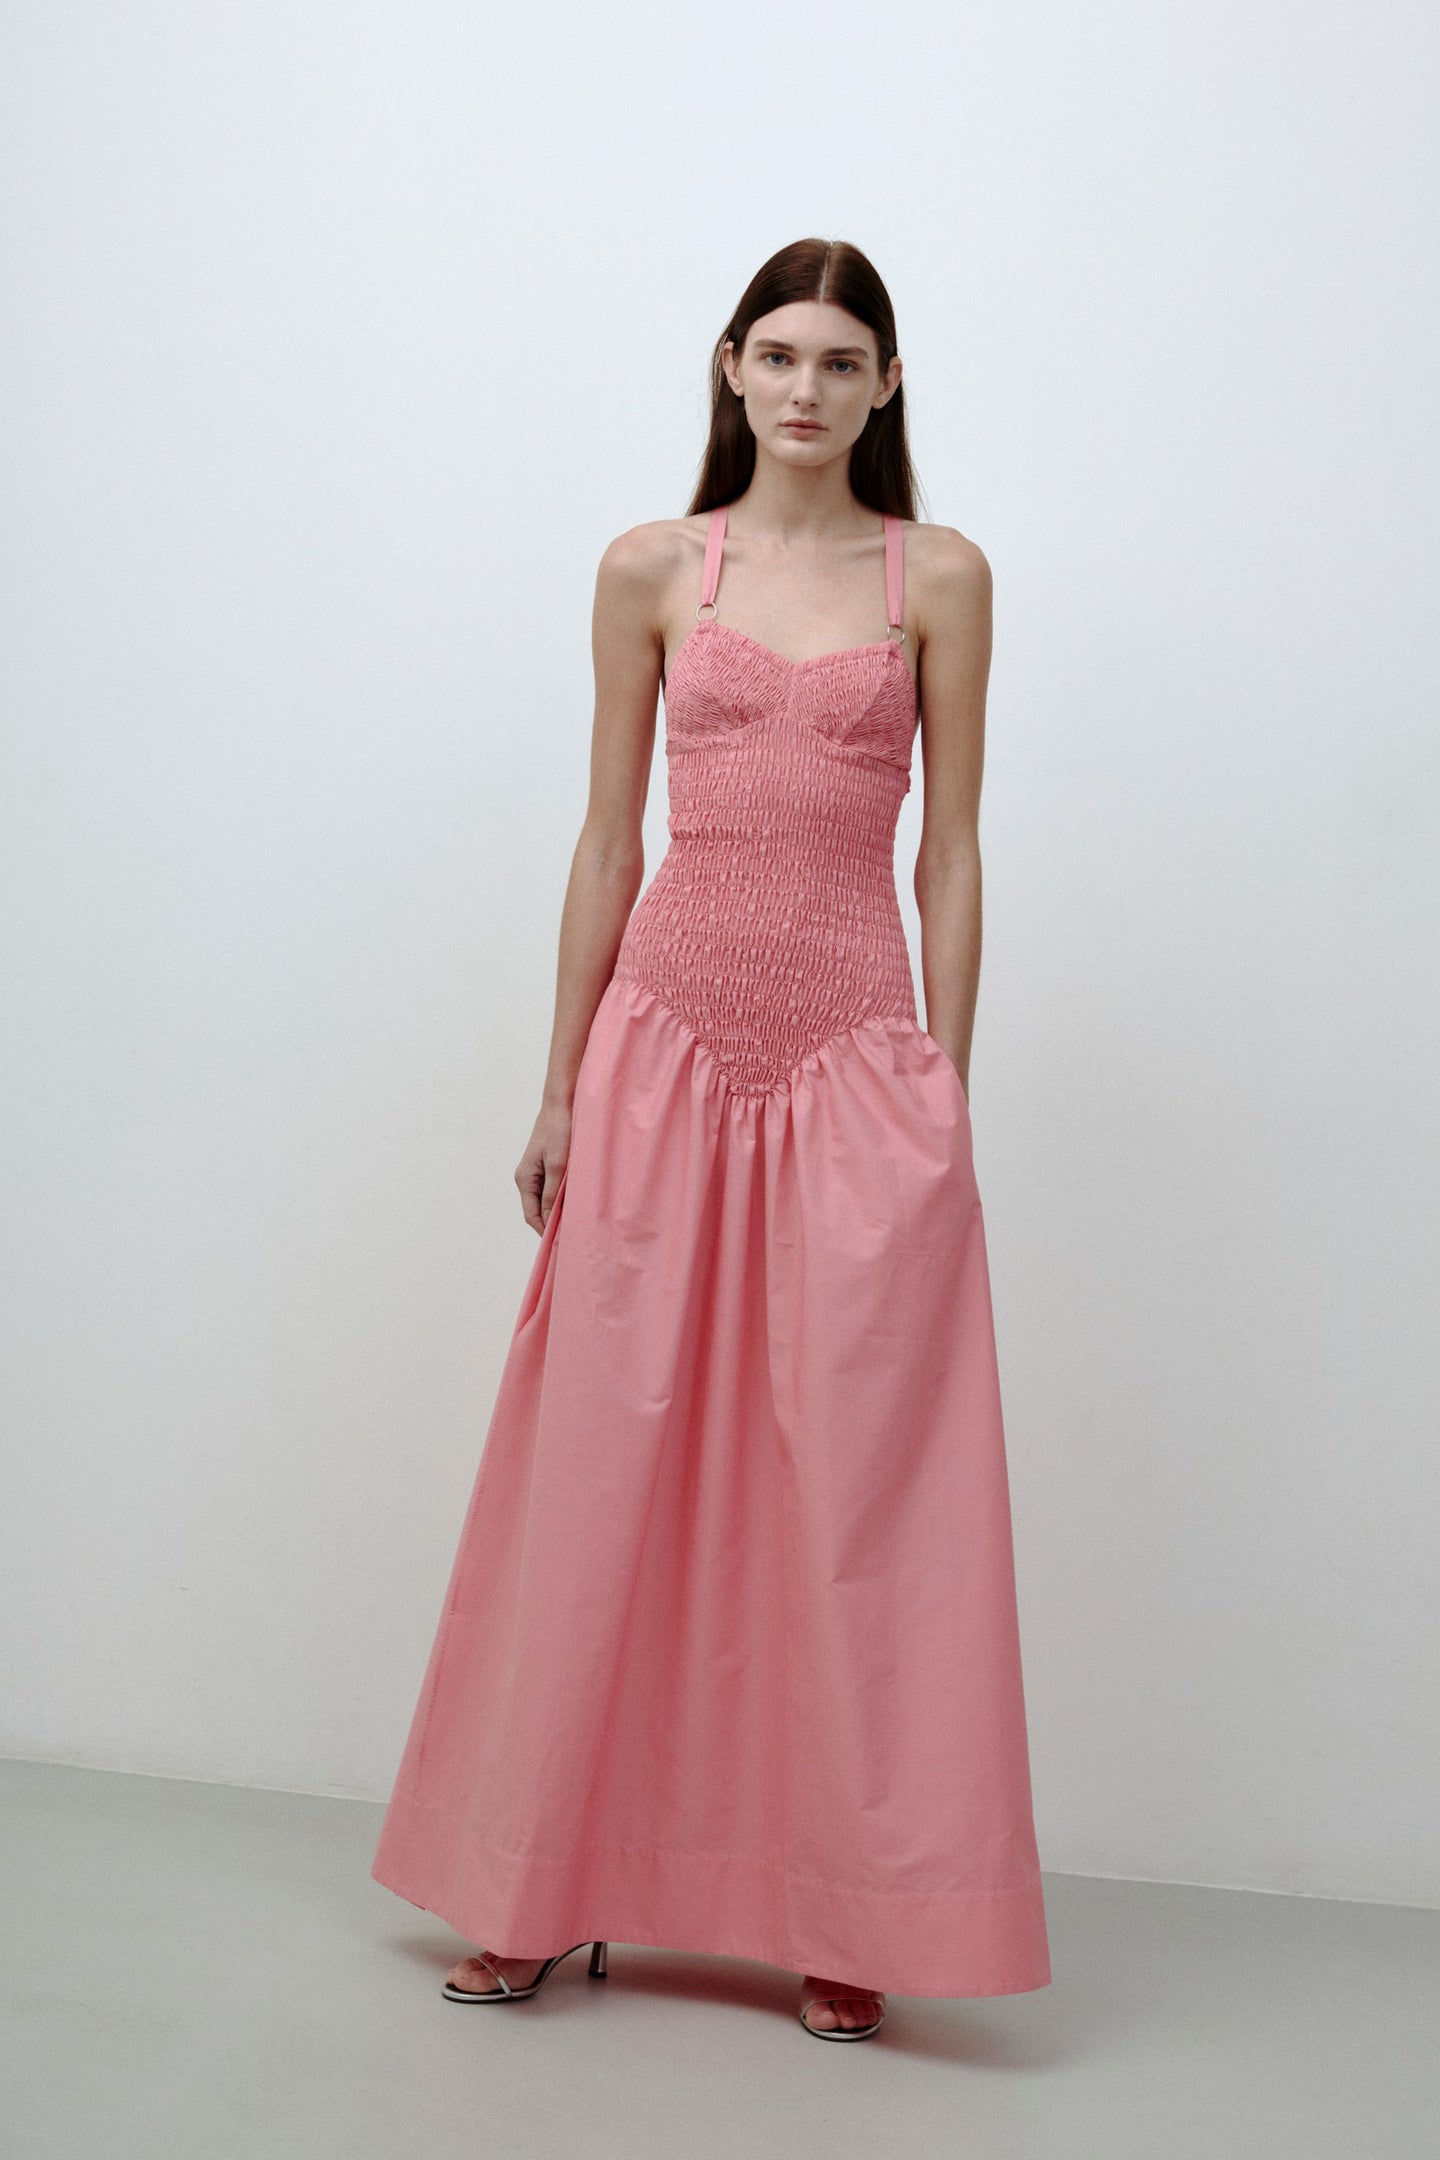 Model in pink Gertrude dress